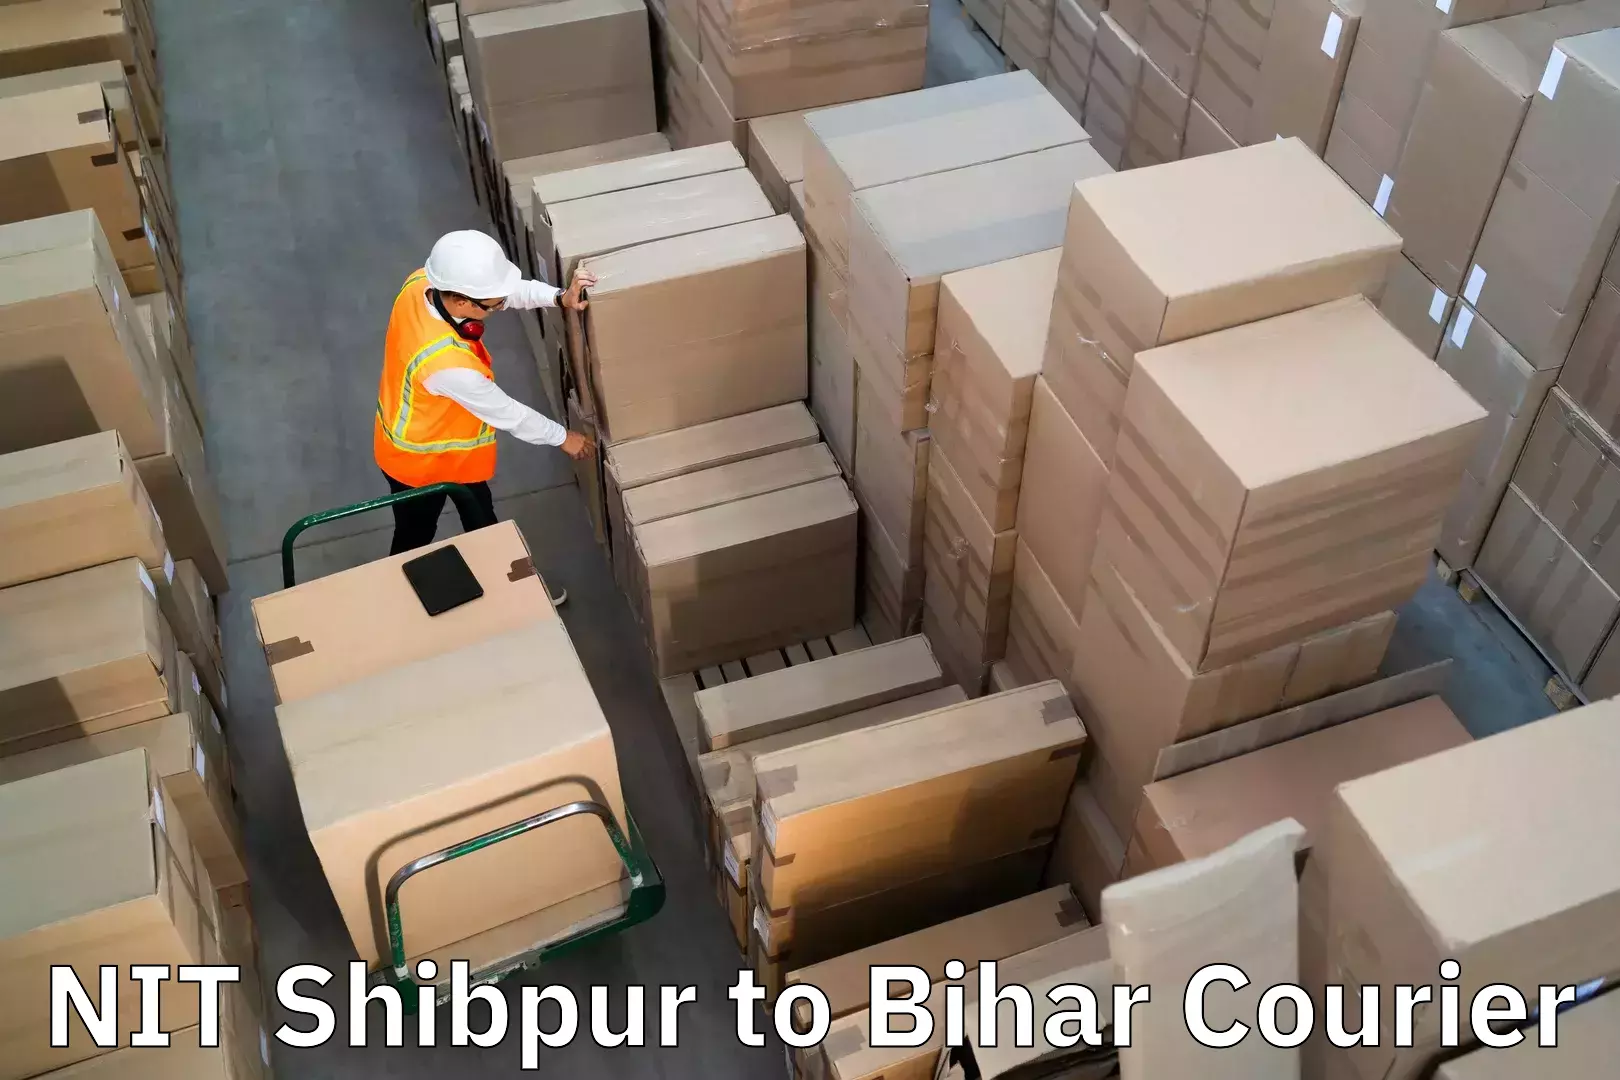 Baggage relocation service NIT Shibpur to Dinara